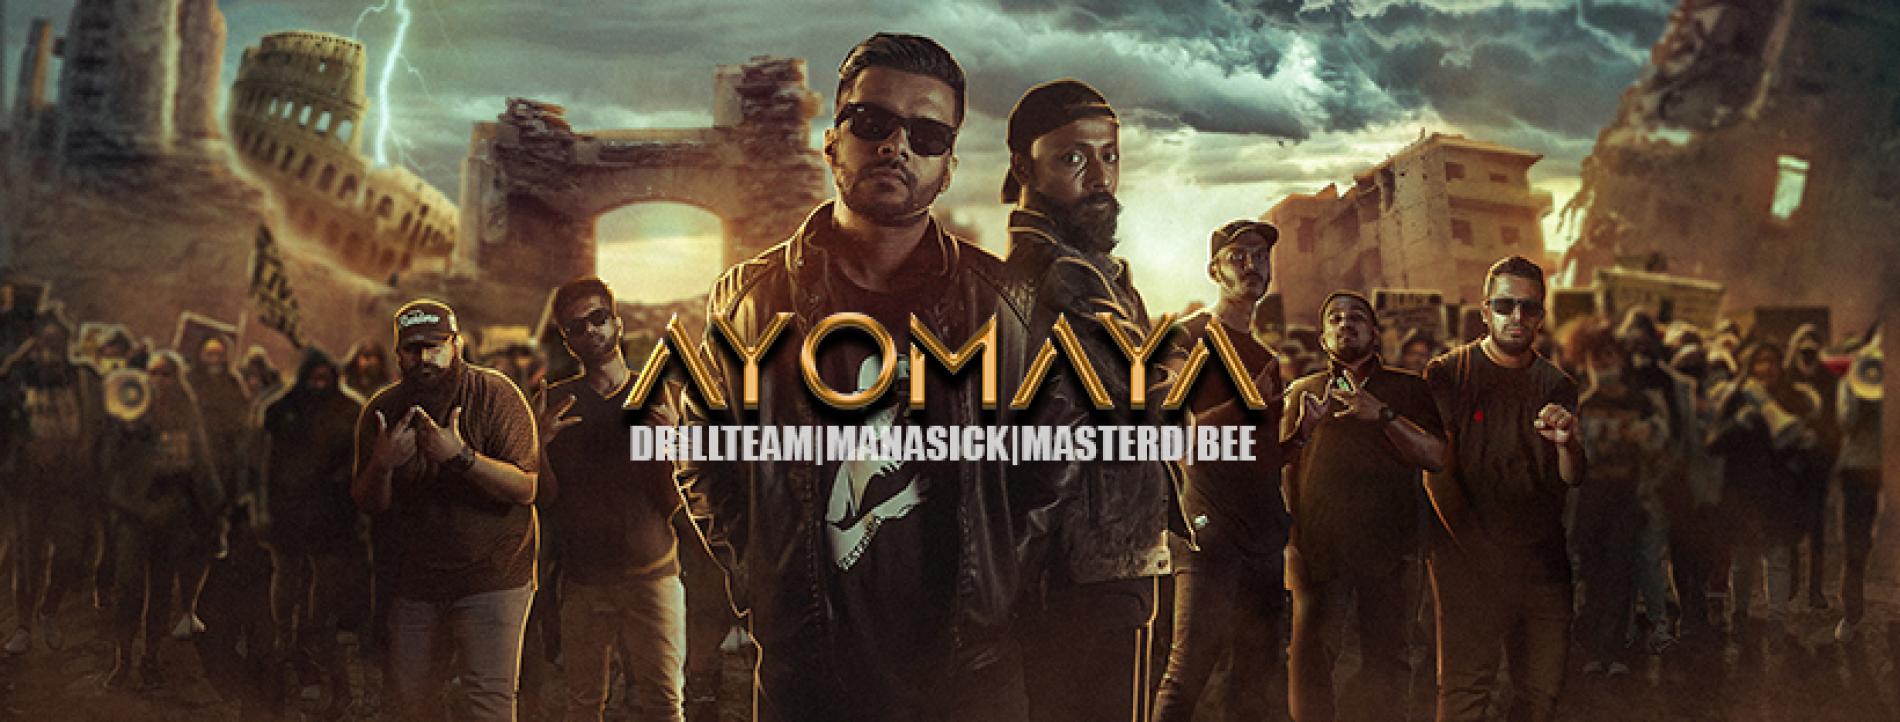 New Music : Drill Team Presents Ayomaya (අයෝමය) ft. Manasick, MasterD & BEE